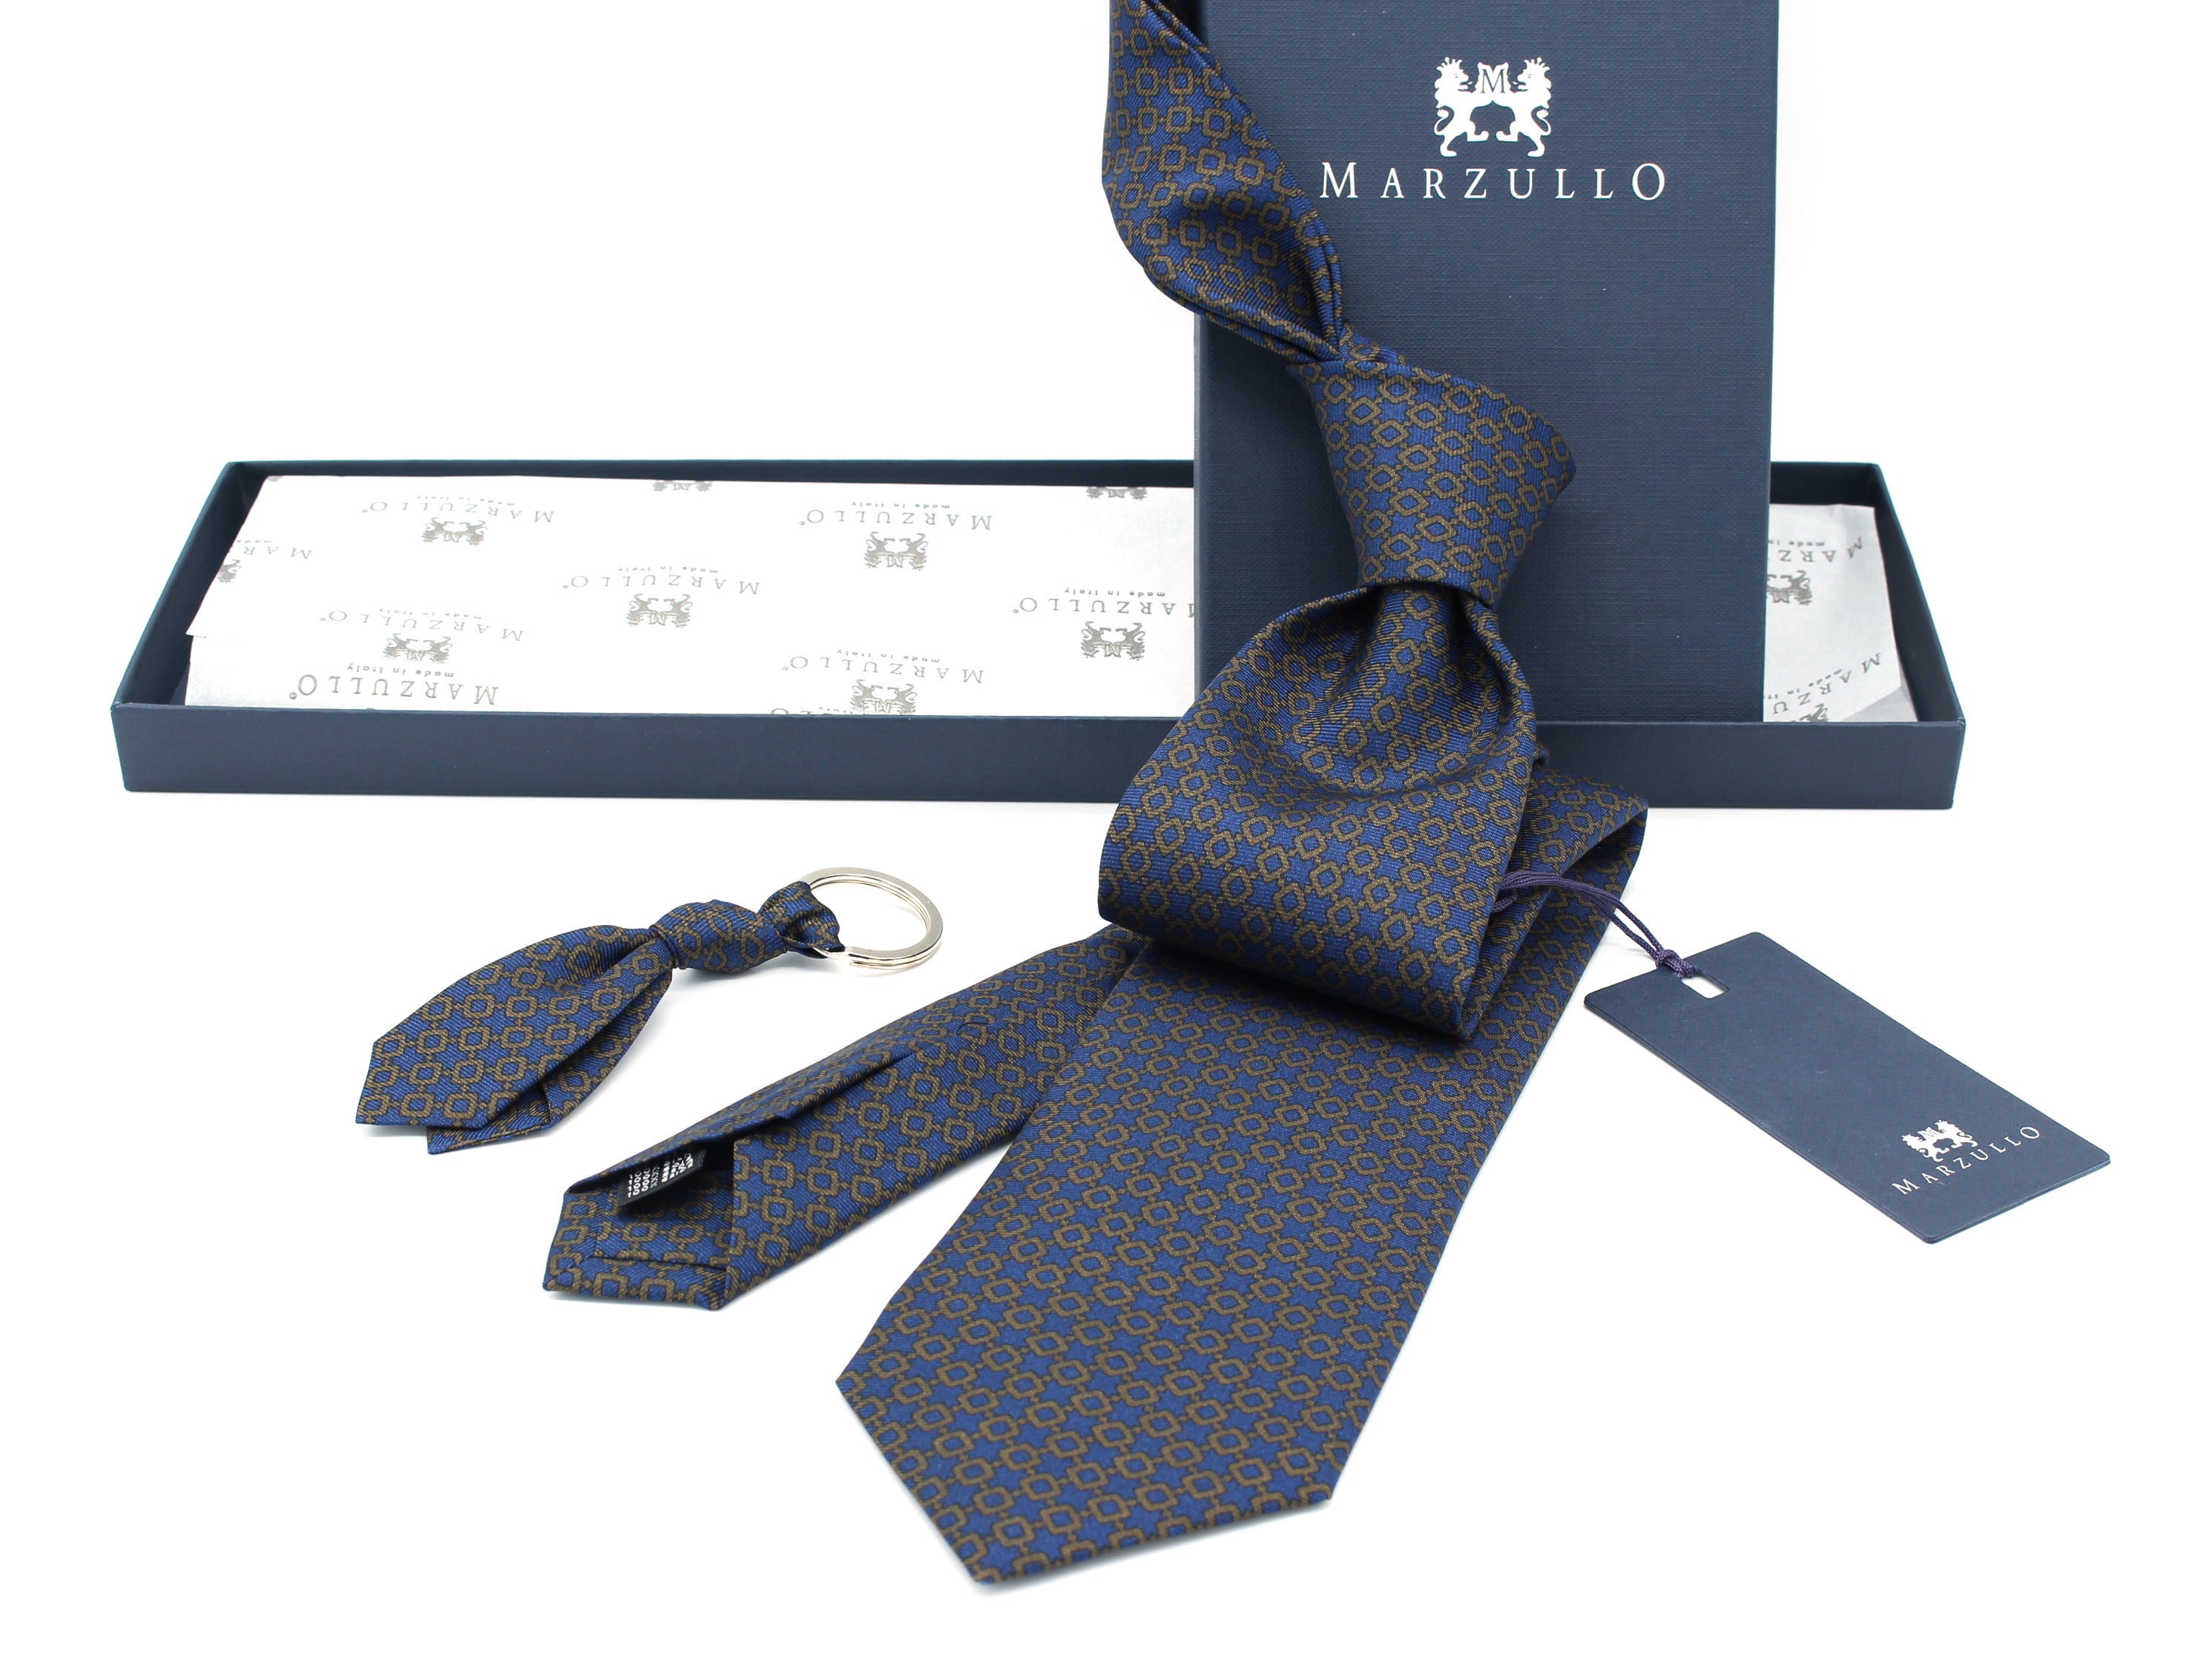 Tailored seven fold tie - micro pattern 9388-4